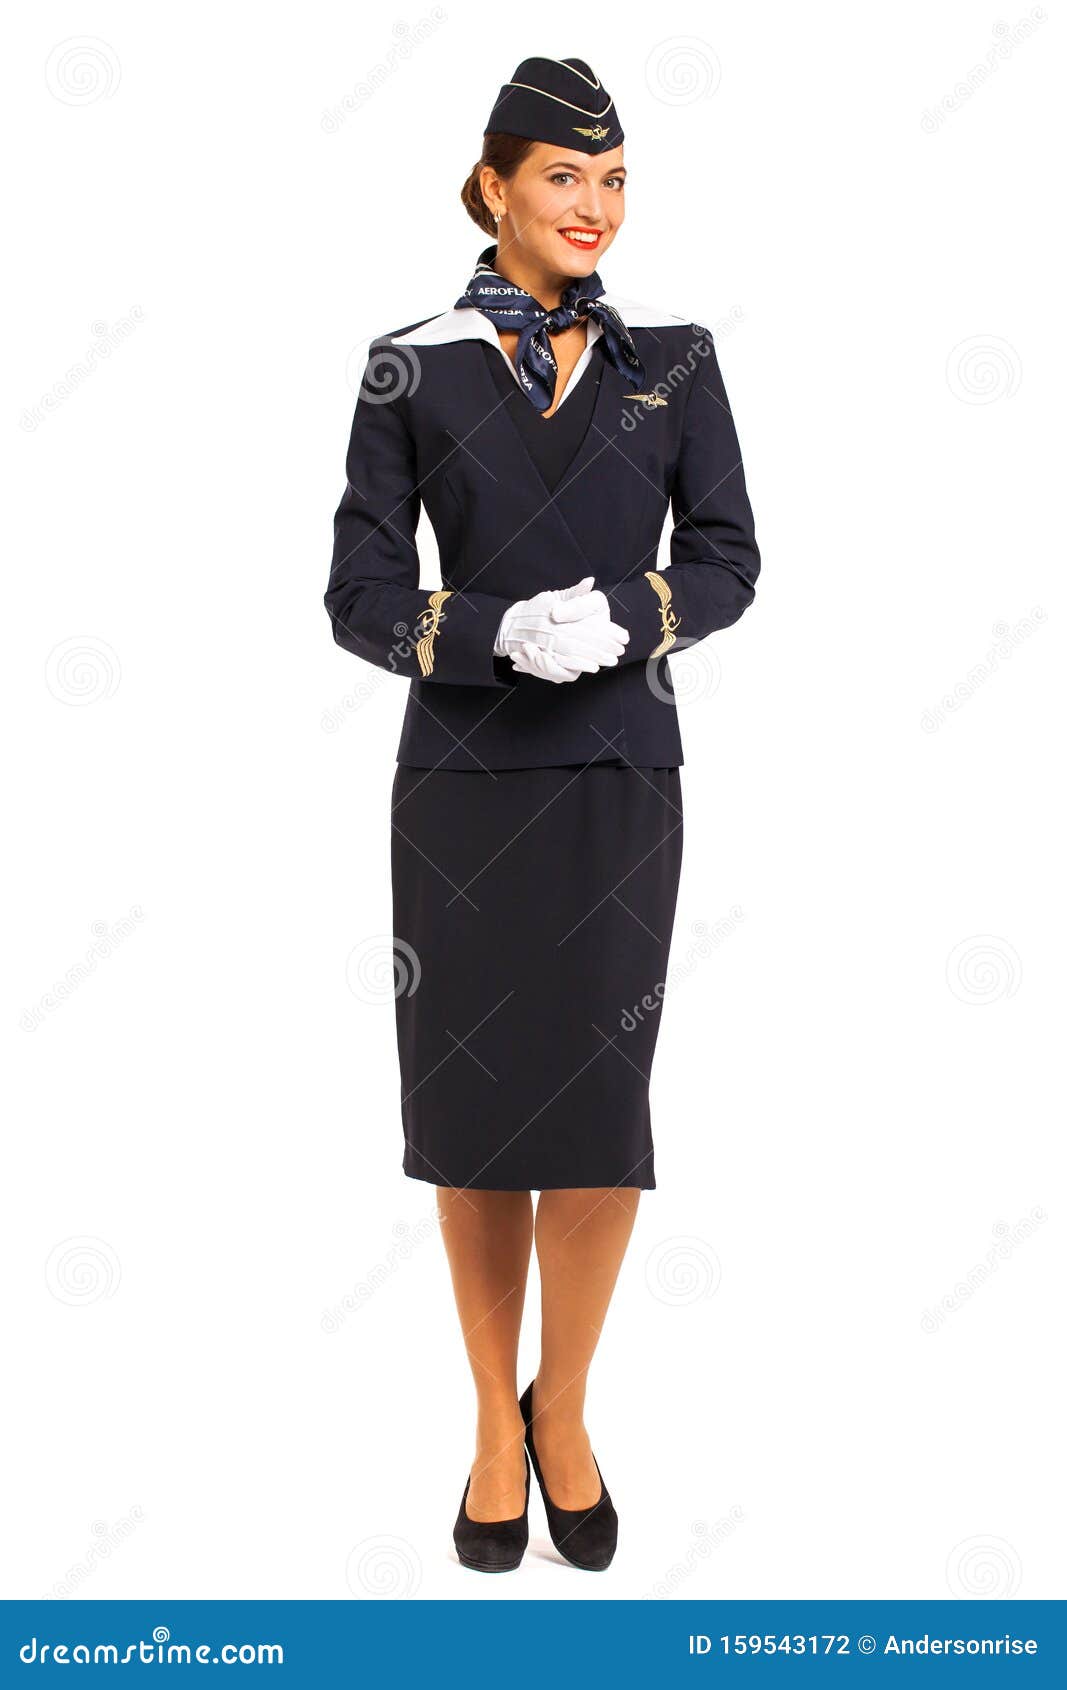 aeroflot uniform